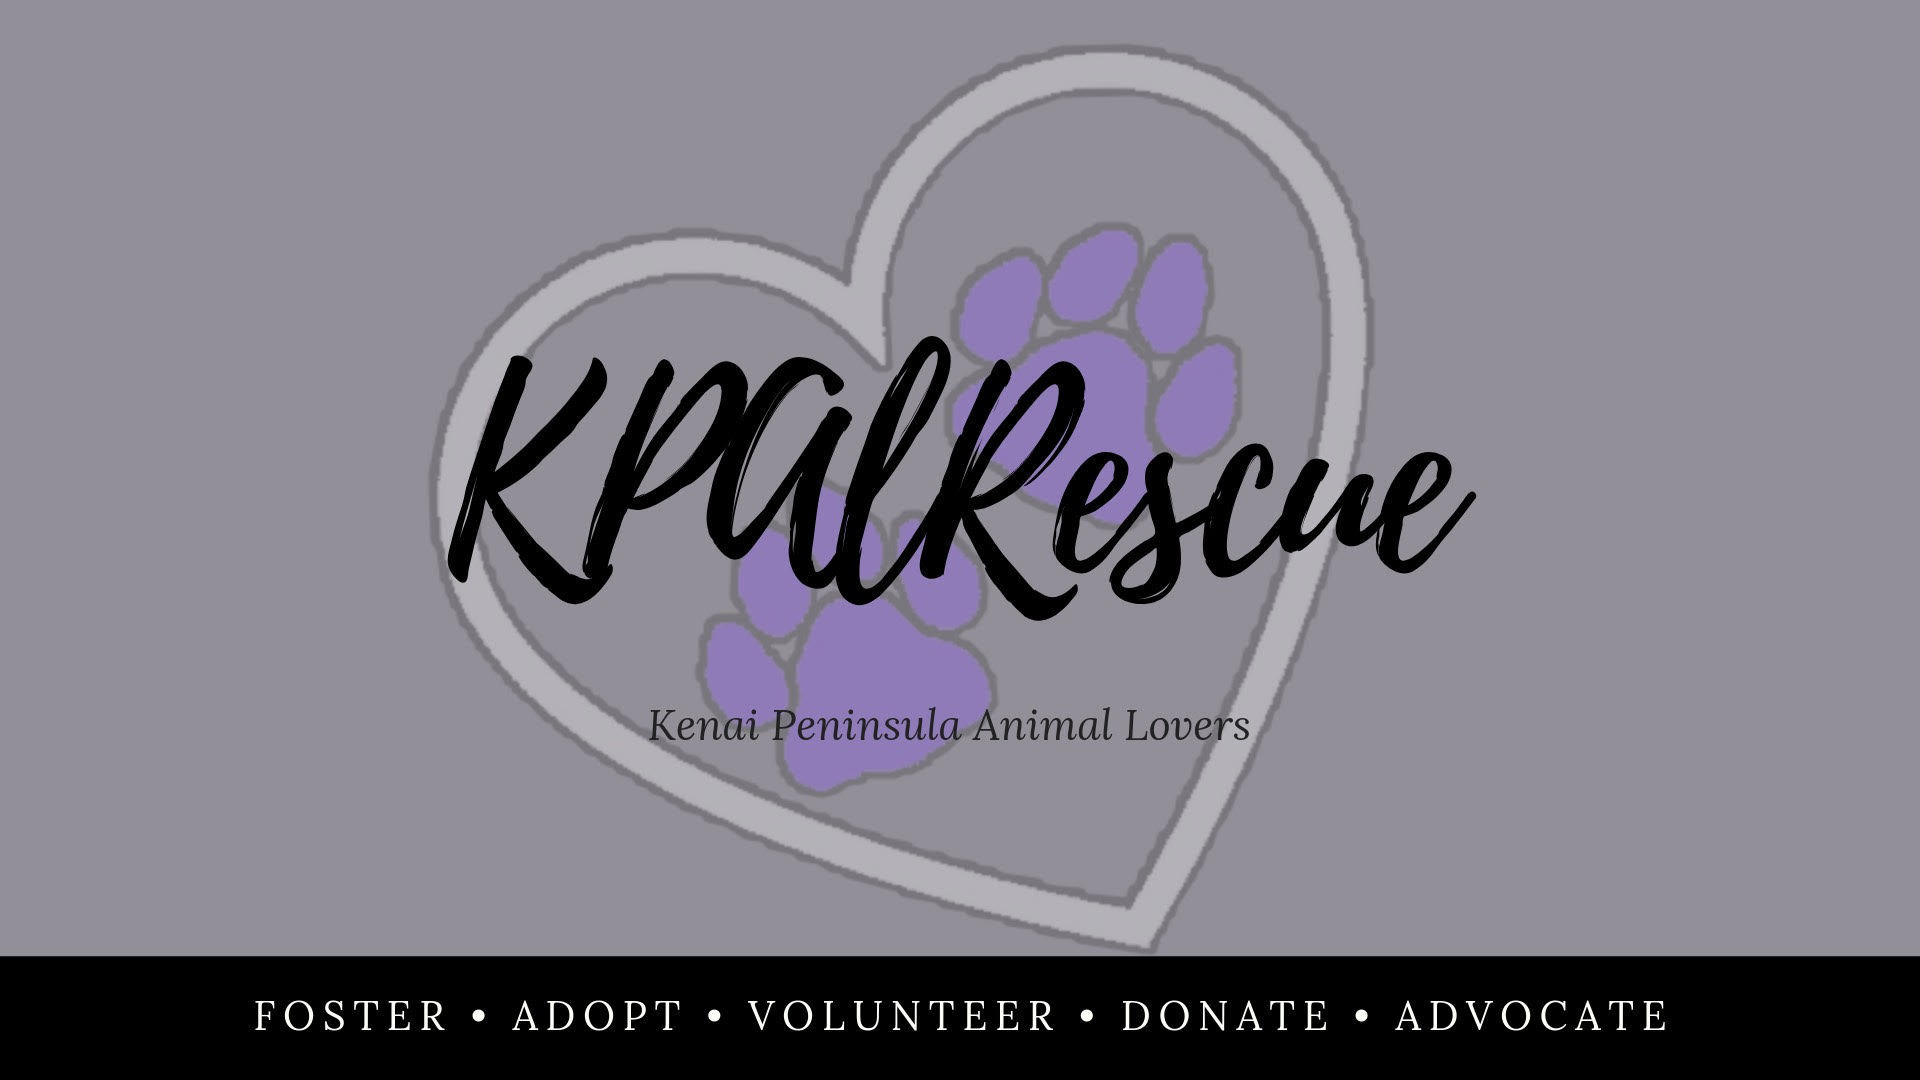 Kenai Peninsula Animal Lovers Rescue